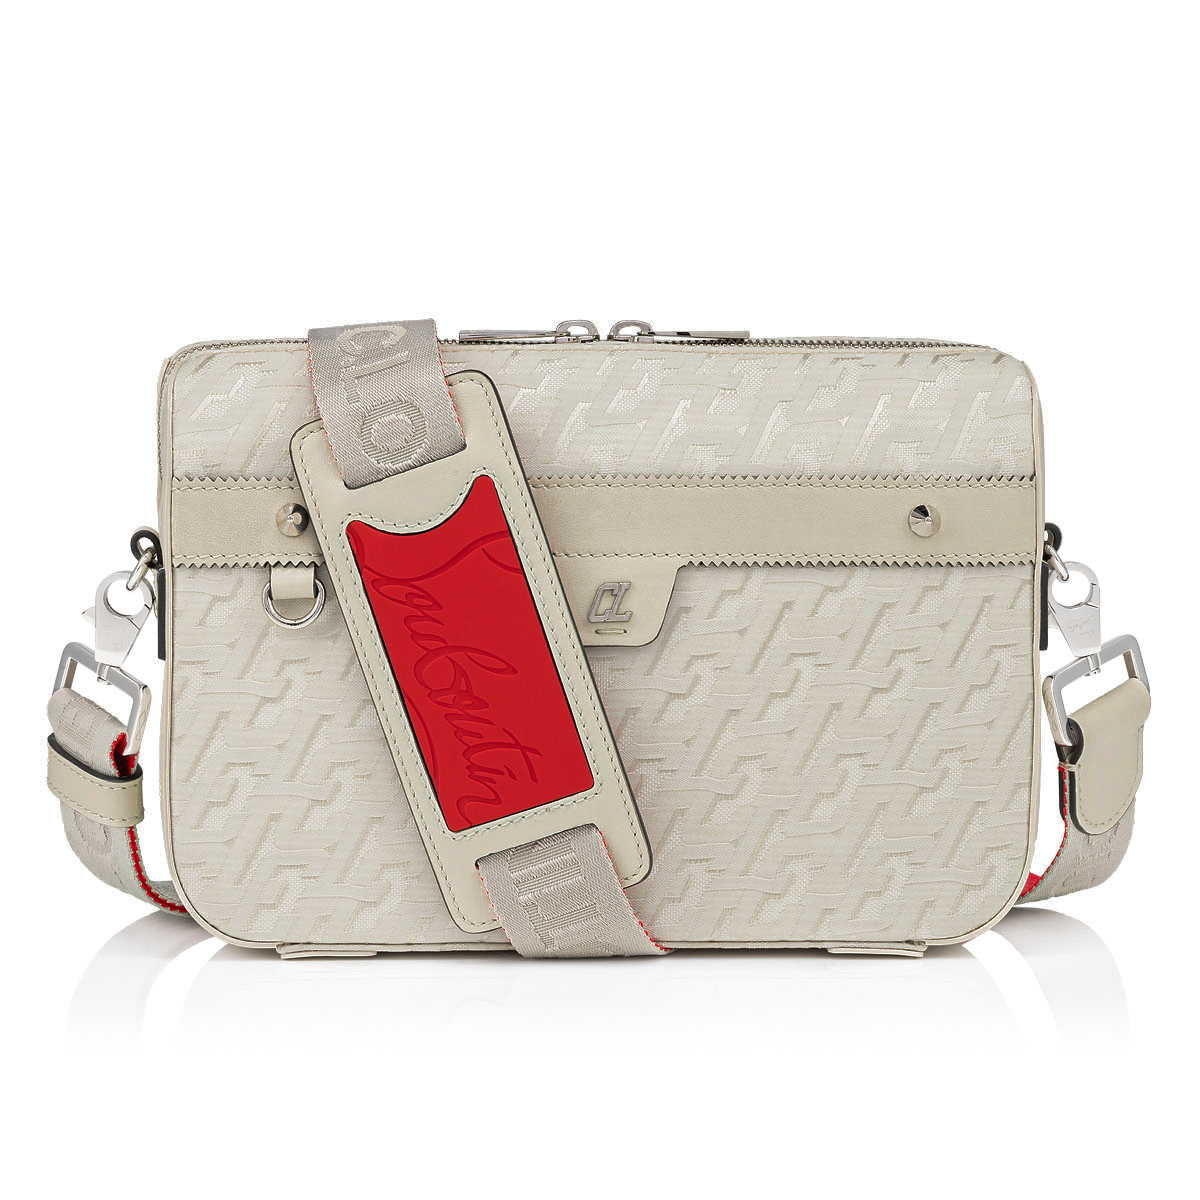 USED Louis Vuitton Beige Nylon Adjustable Sporty Bag Strap